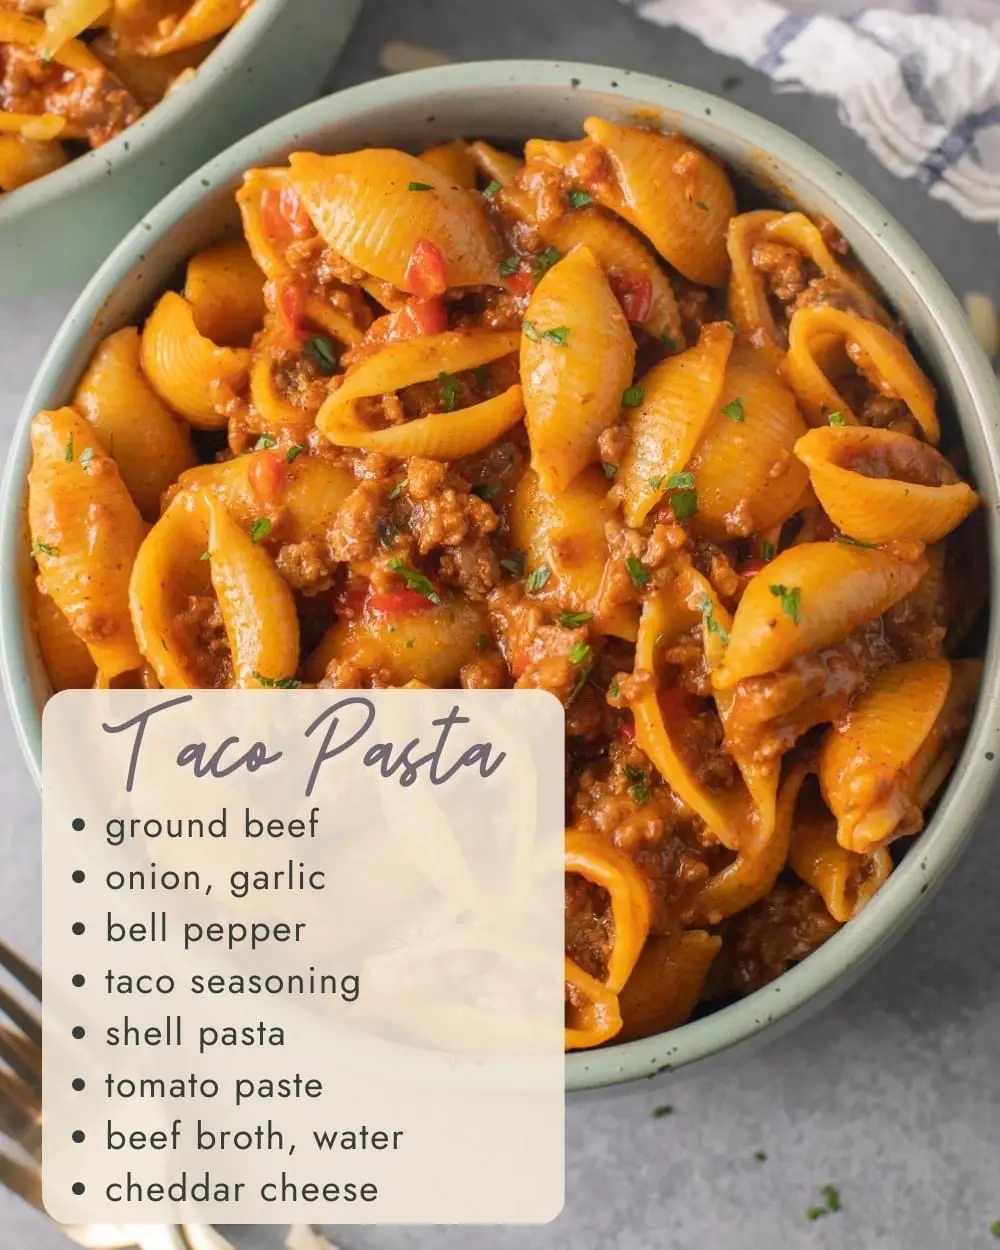 Barilla Mini Penne Pasta, 16 oz. Box (Pack of 36) - Non-GMO Pasta Made with  Durum Wheat Semolina - Italy's #1 Pasta Brand - Kosher Certified Pasta